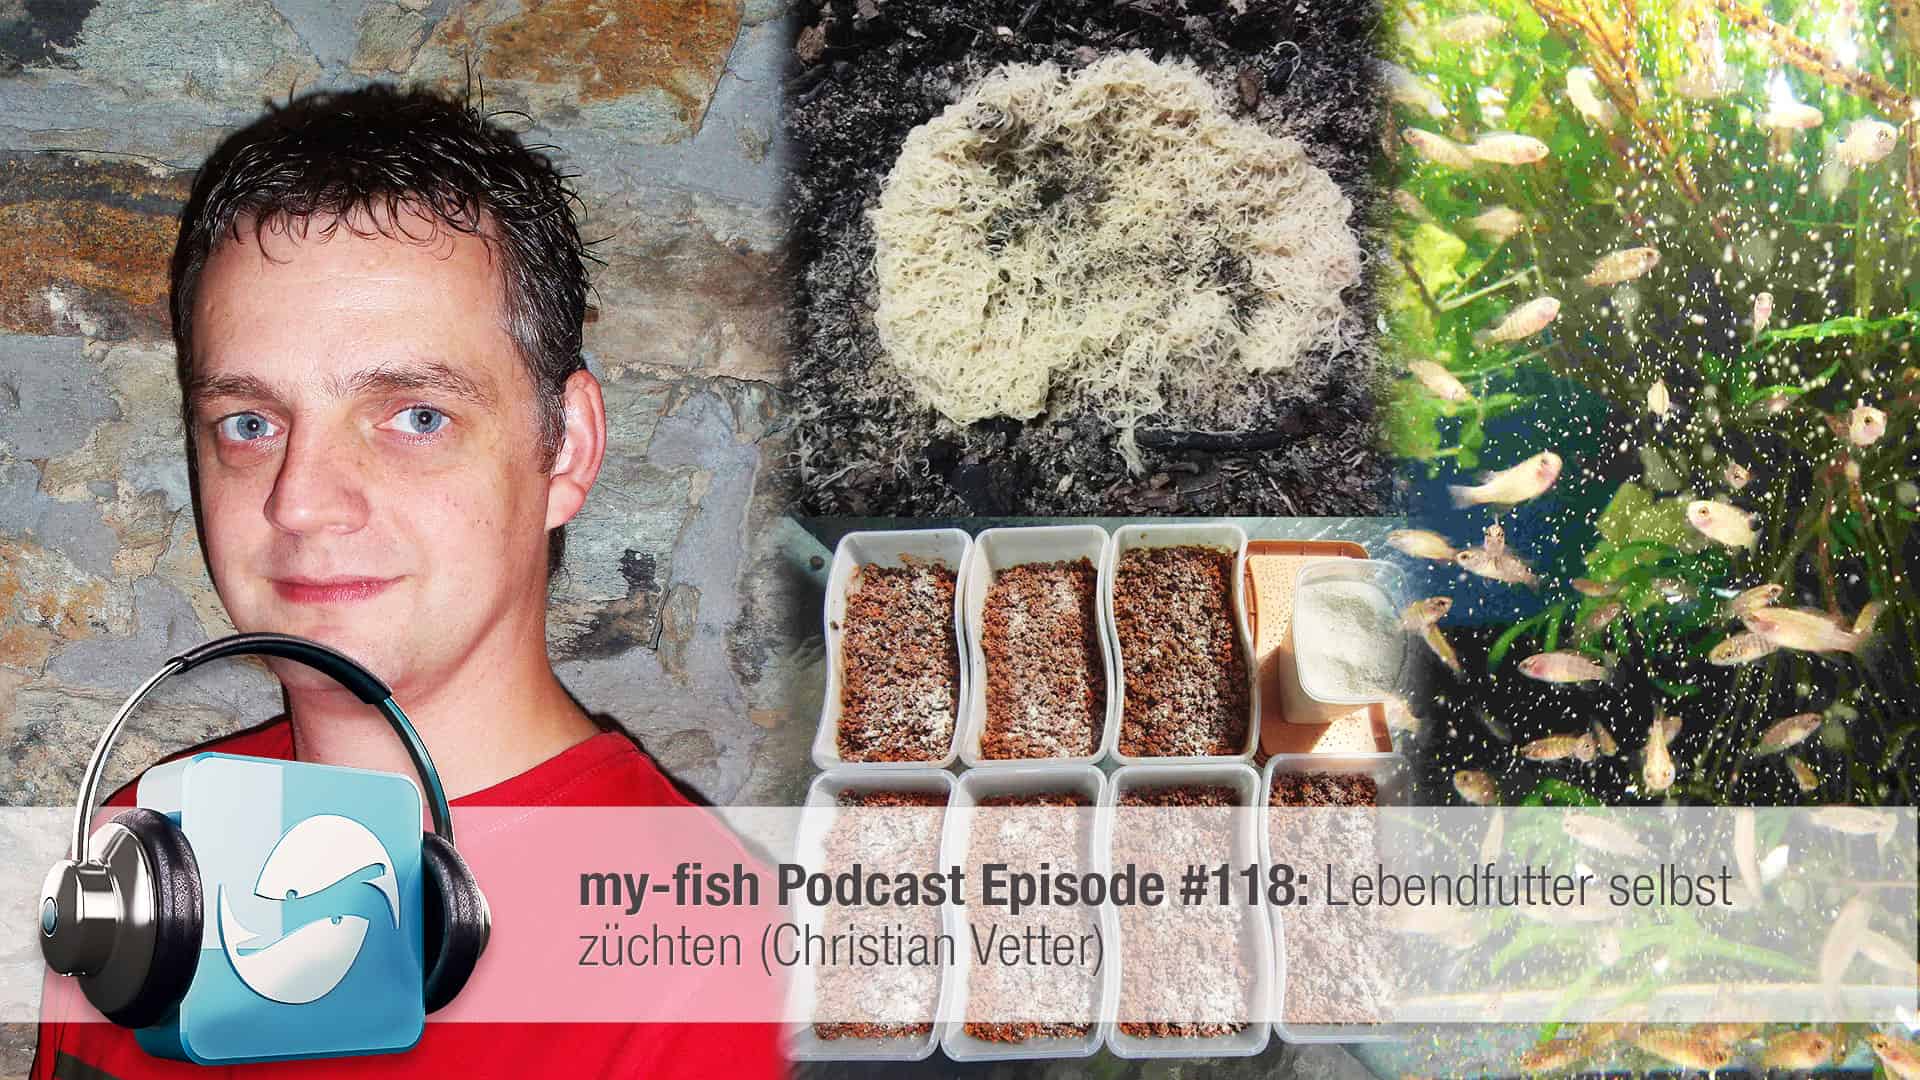 Podcast Episode #118: Lebendfutter selbst züchten (Christian Vetter)